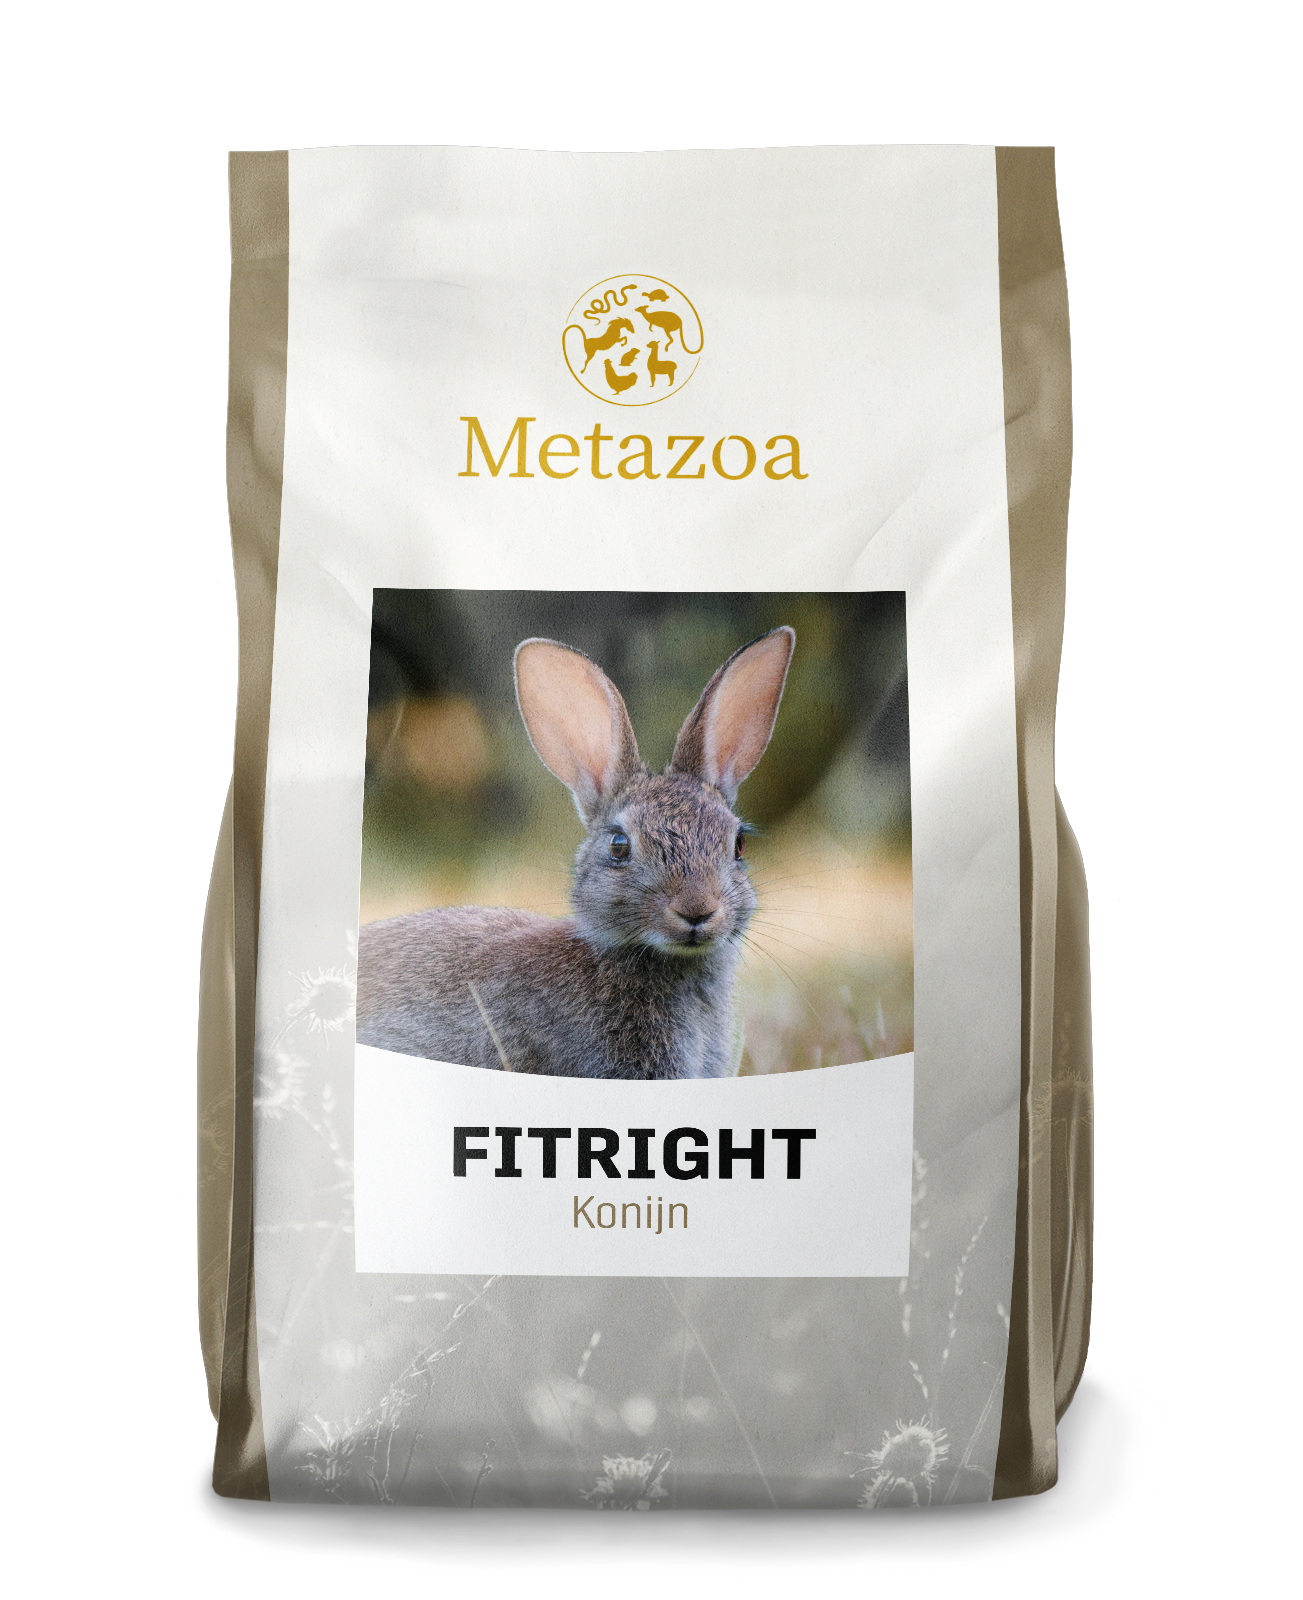 Download Metazoa Verpakking Exotic Fitright Konijn 15 kg EAN 4260176355250